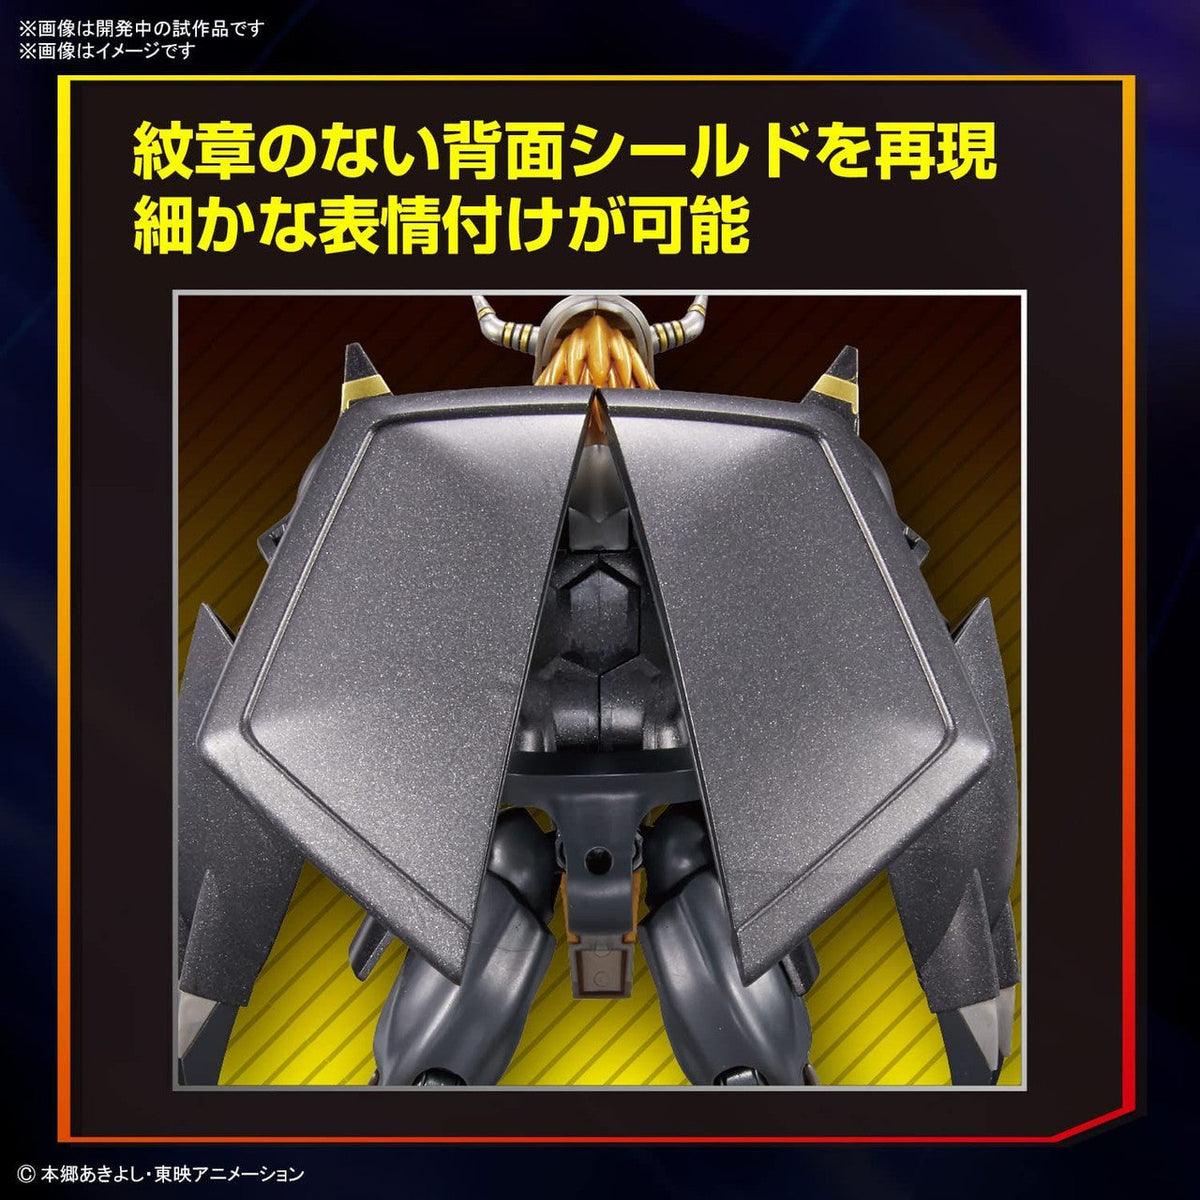 Digimon Figure-Rise Standard Black Wargreymon-Bandai-Ace Cards &amp; Collectibles